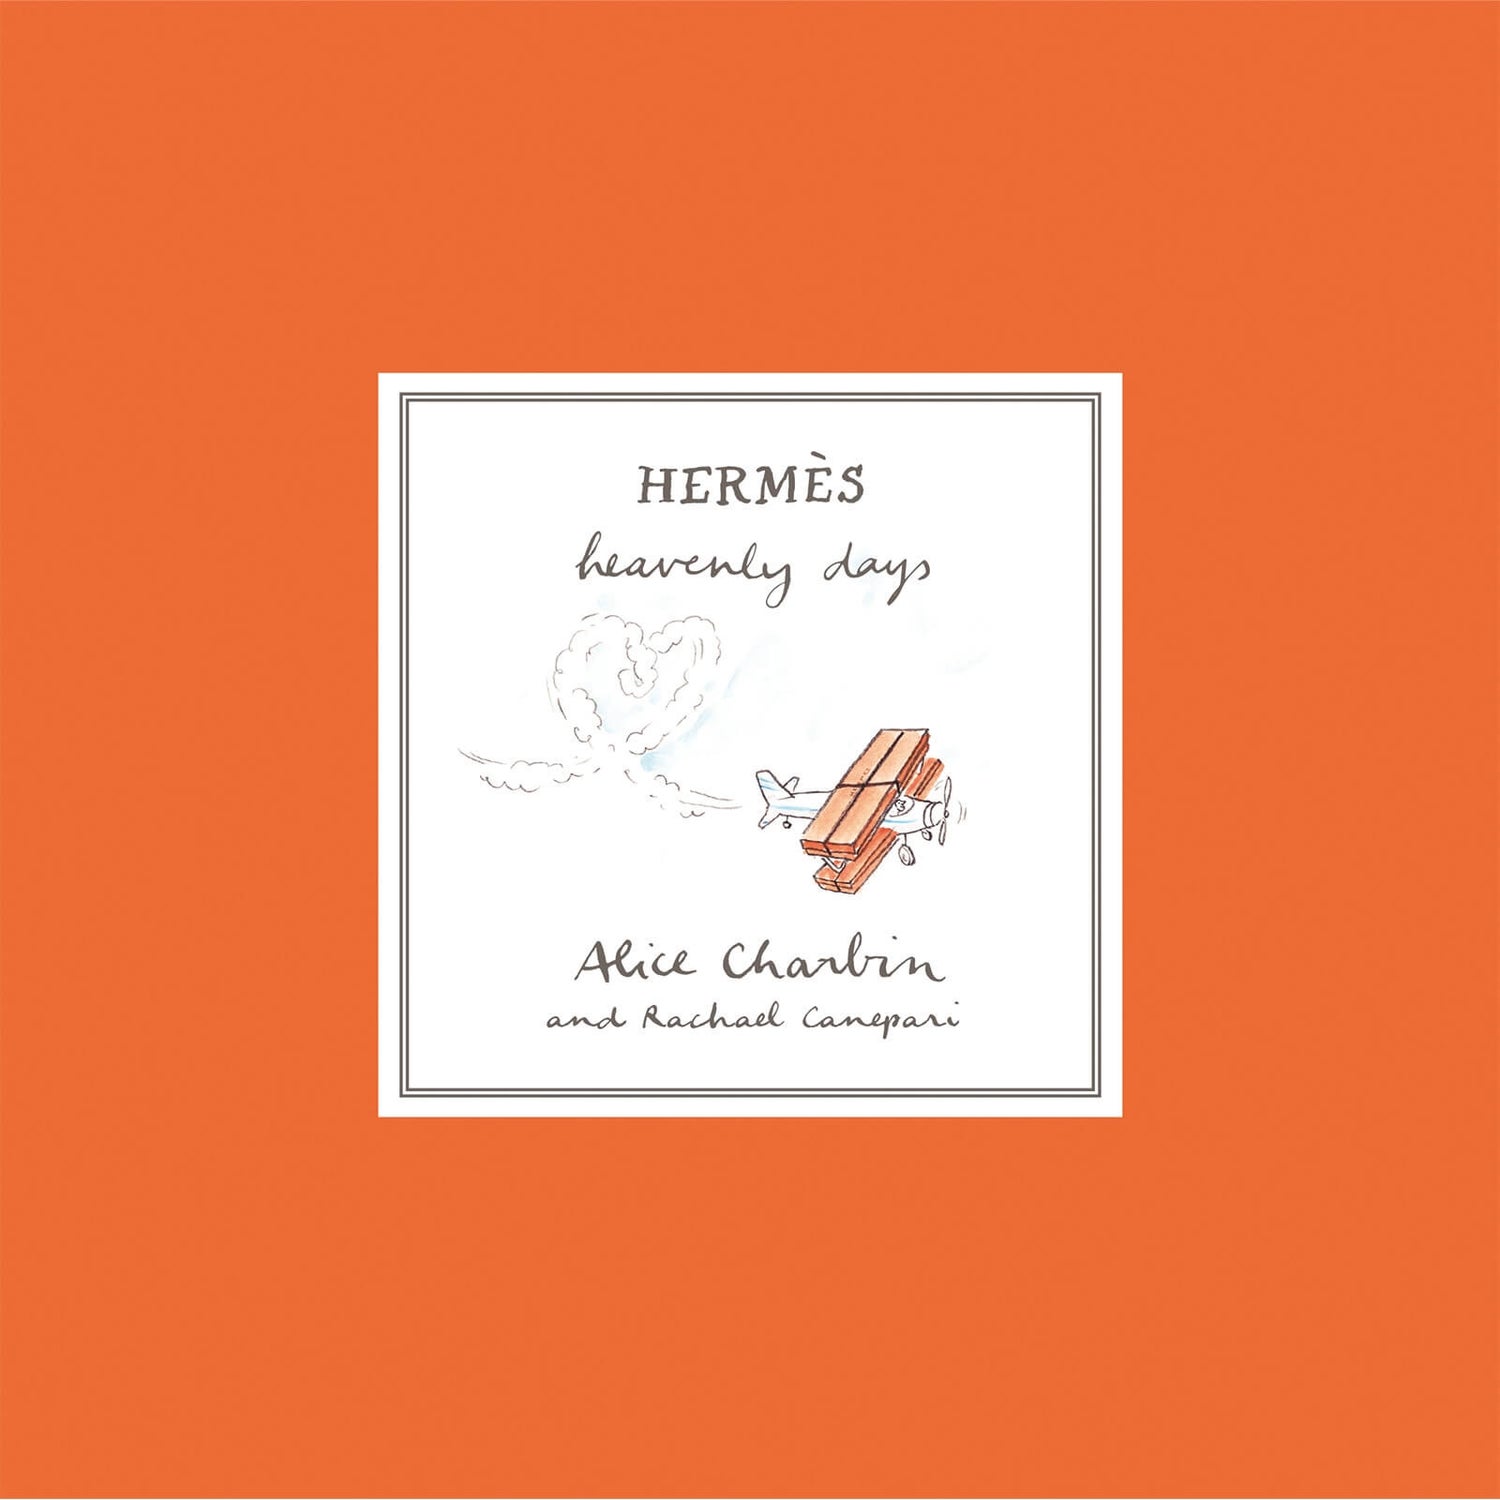 Abrams & Chronicle: Hermès Heavenly Days